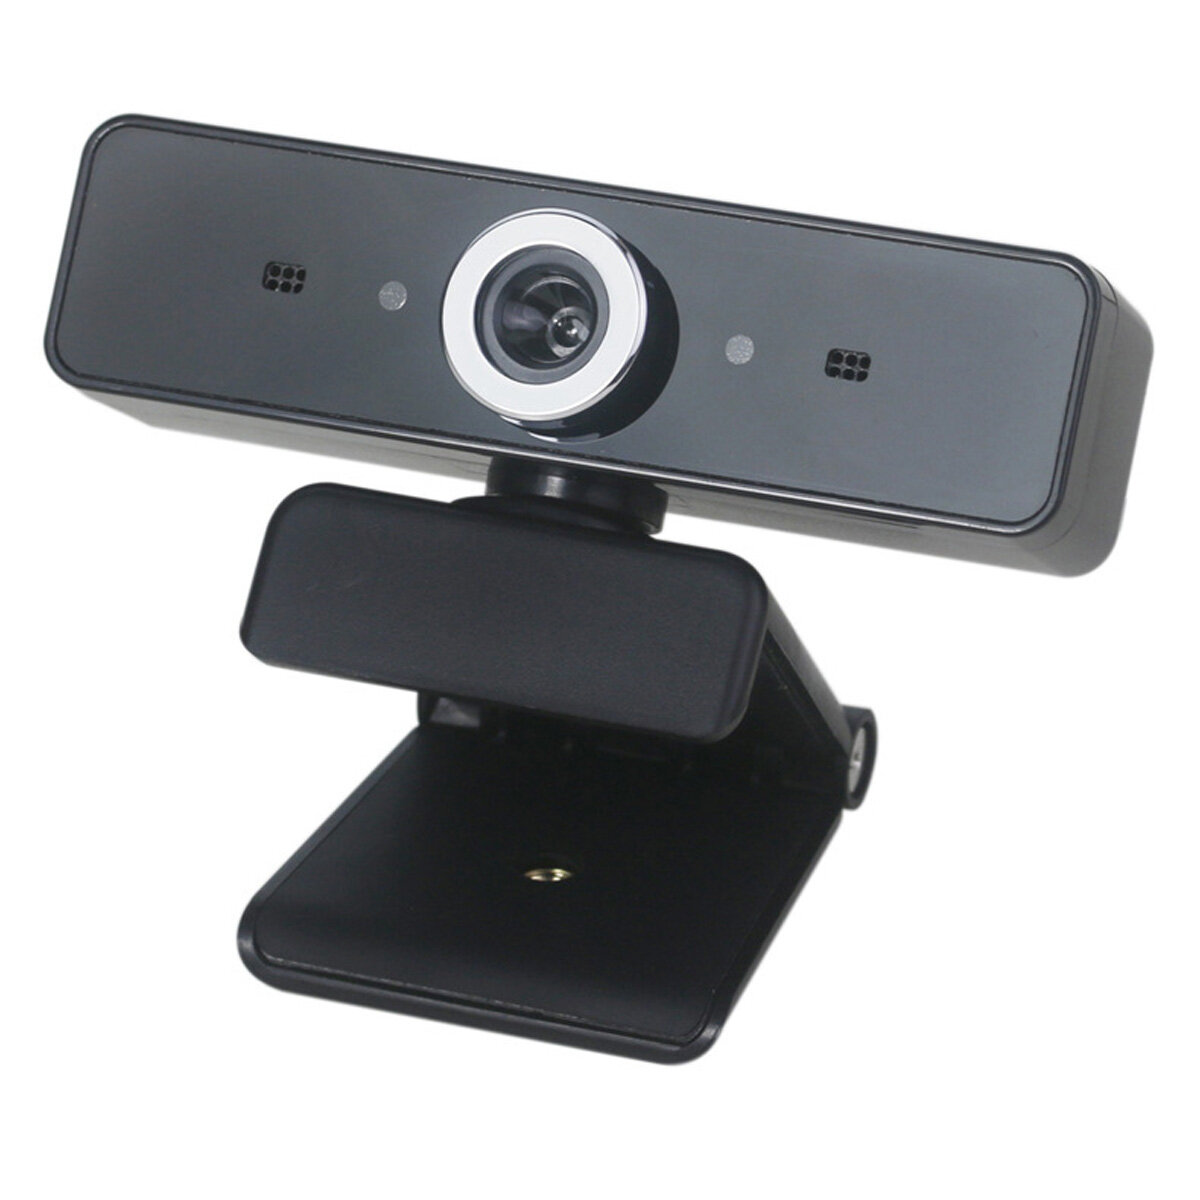 Avanc HD 720P USB-webcam met microfoon voor pc-laptop